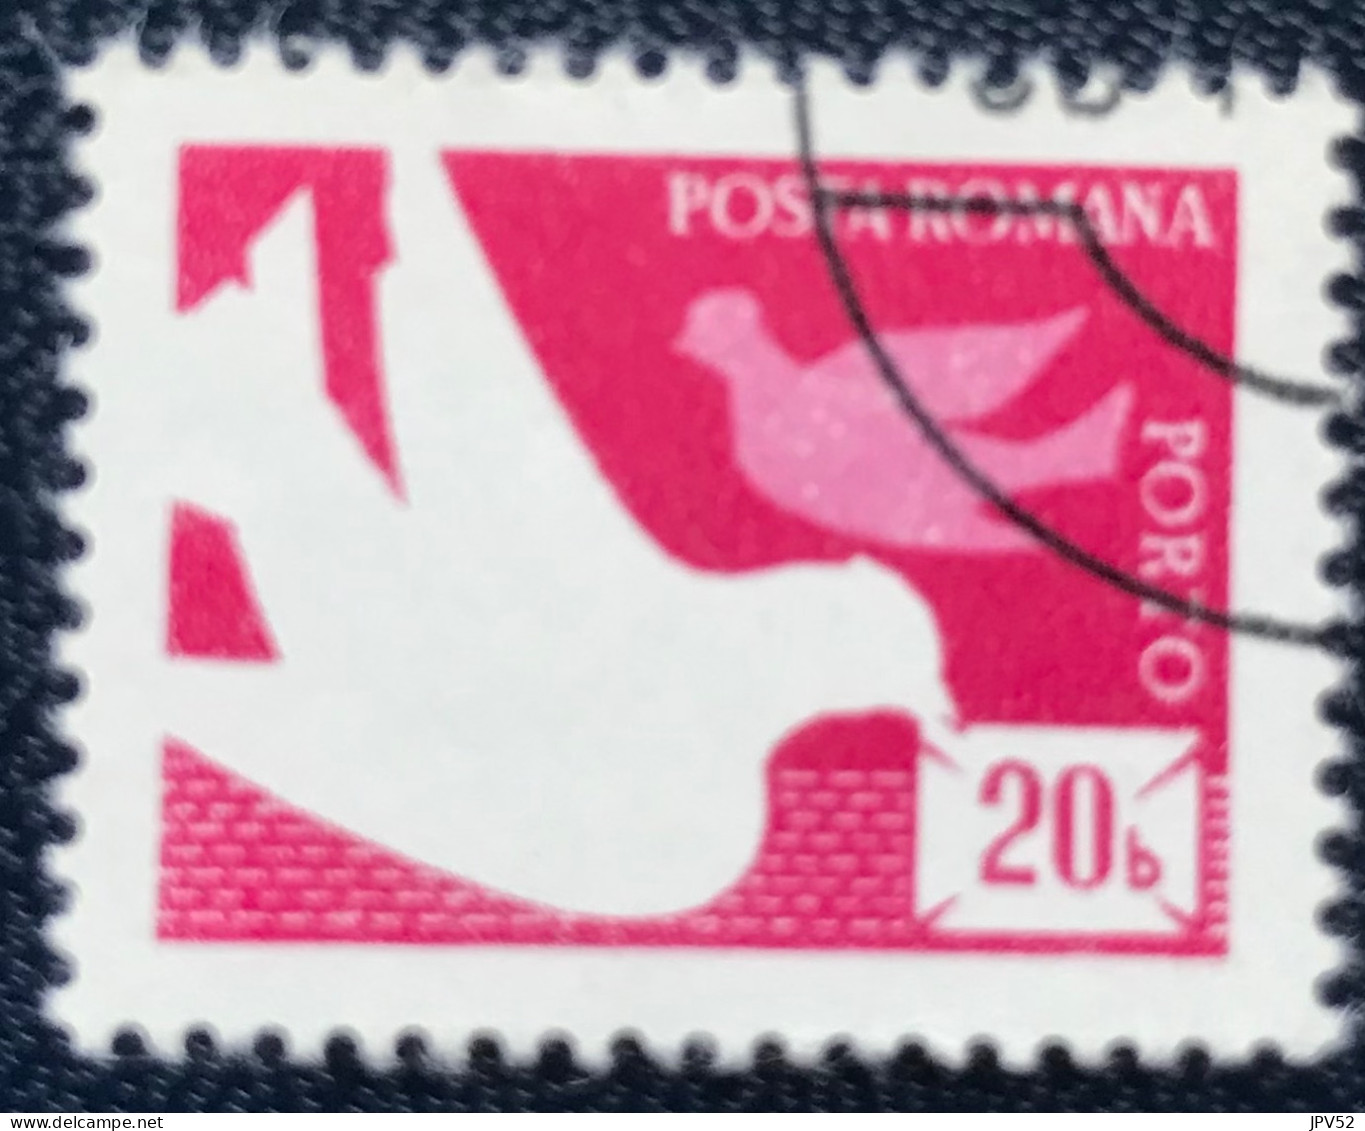 Romana - Roemenië - C14/54 - 1974 - (°)used - Michel 121 - Postduiven - Postage Due